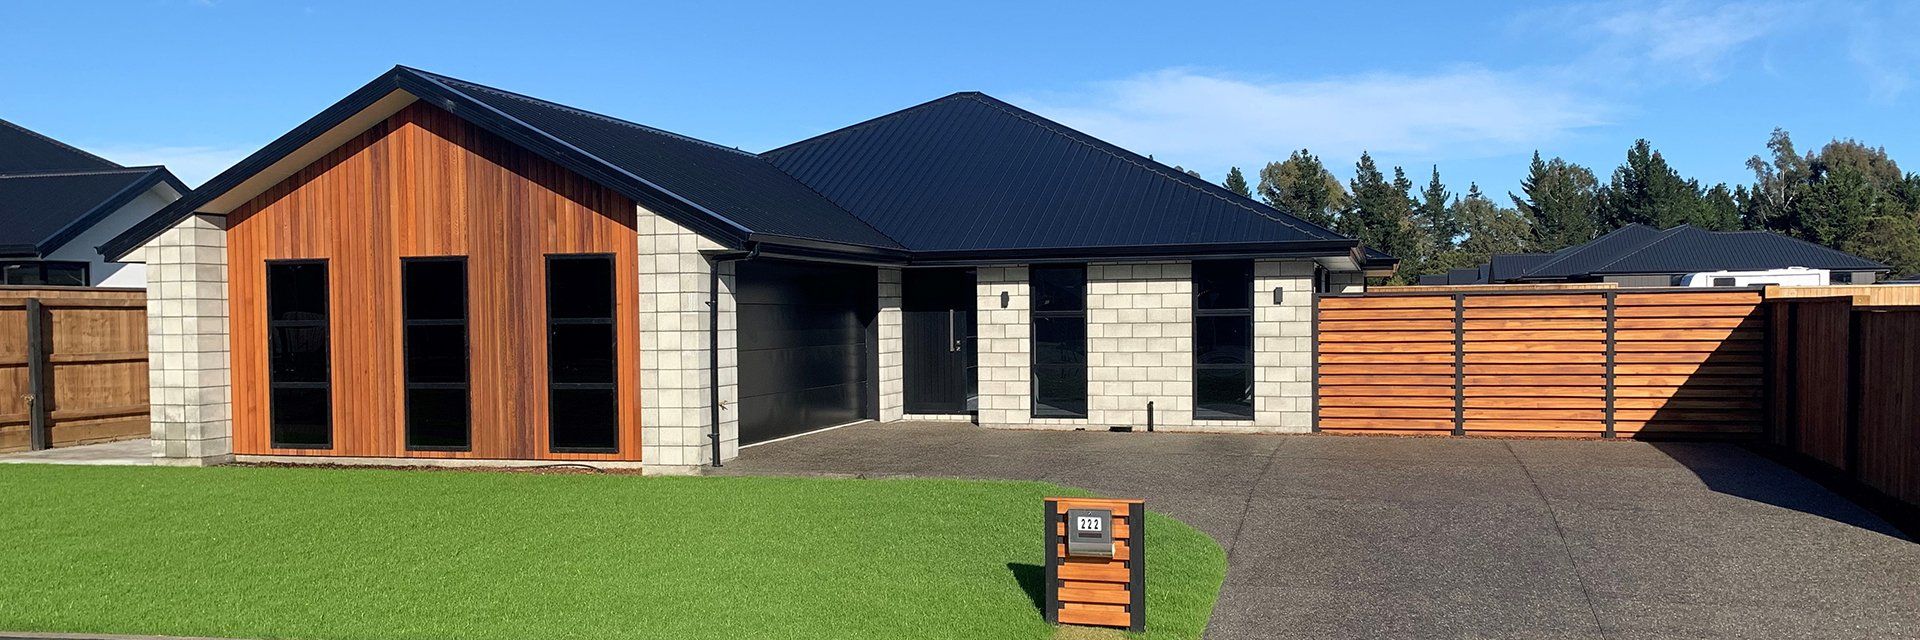 House build by Hillco Ltd in Blenheim, NZ